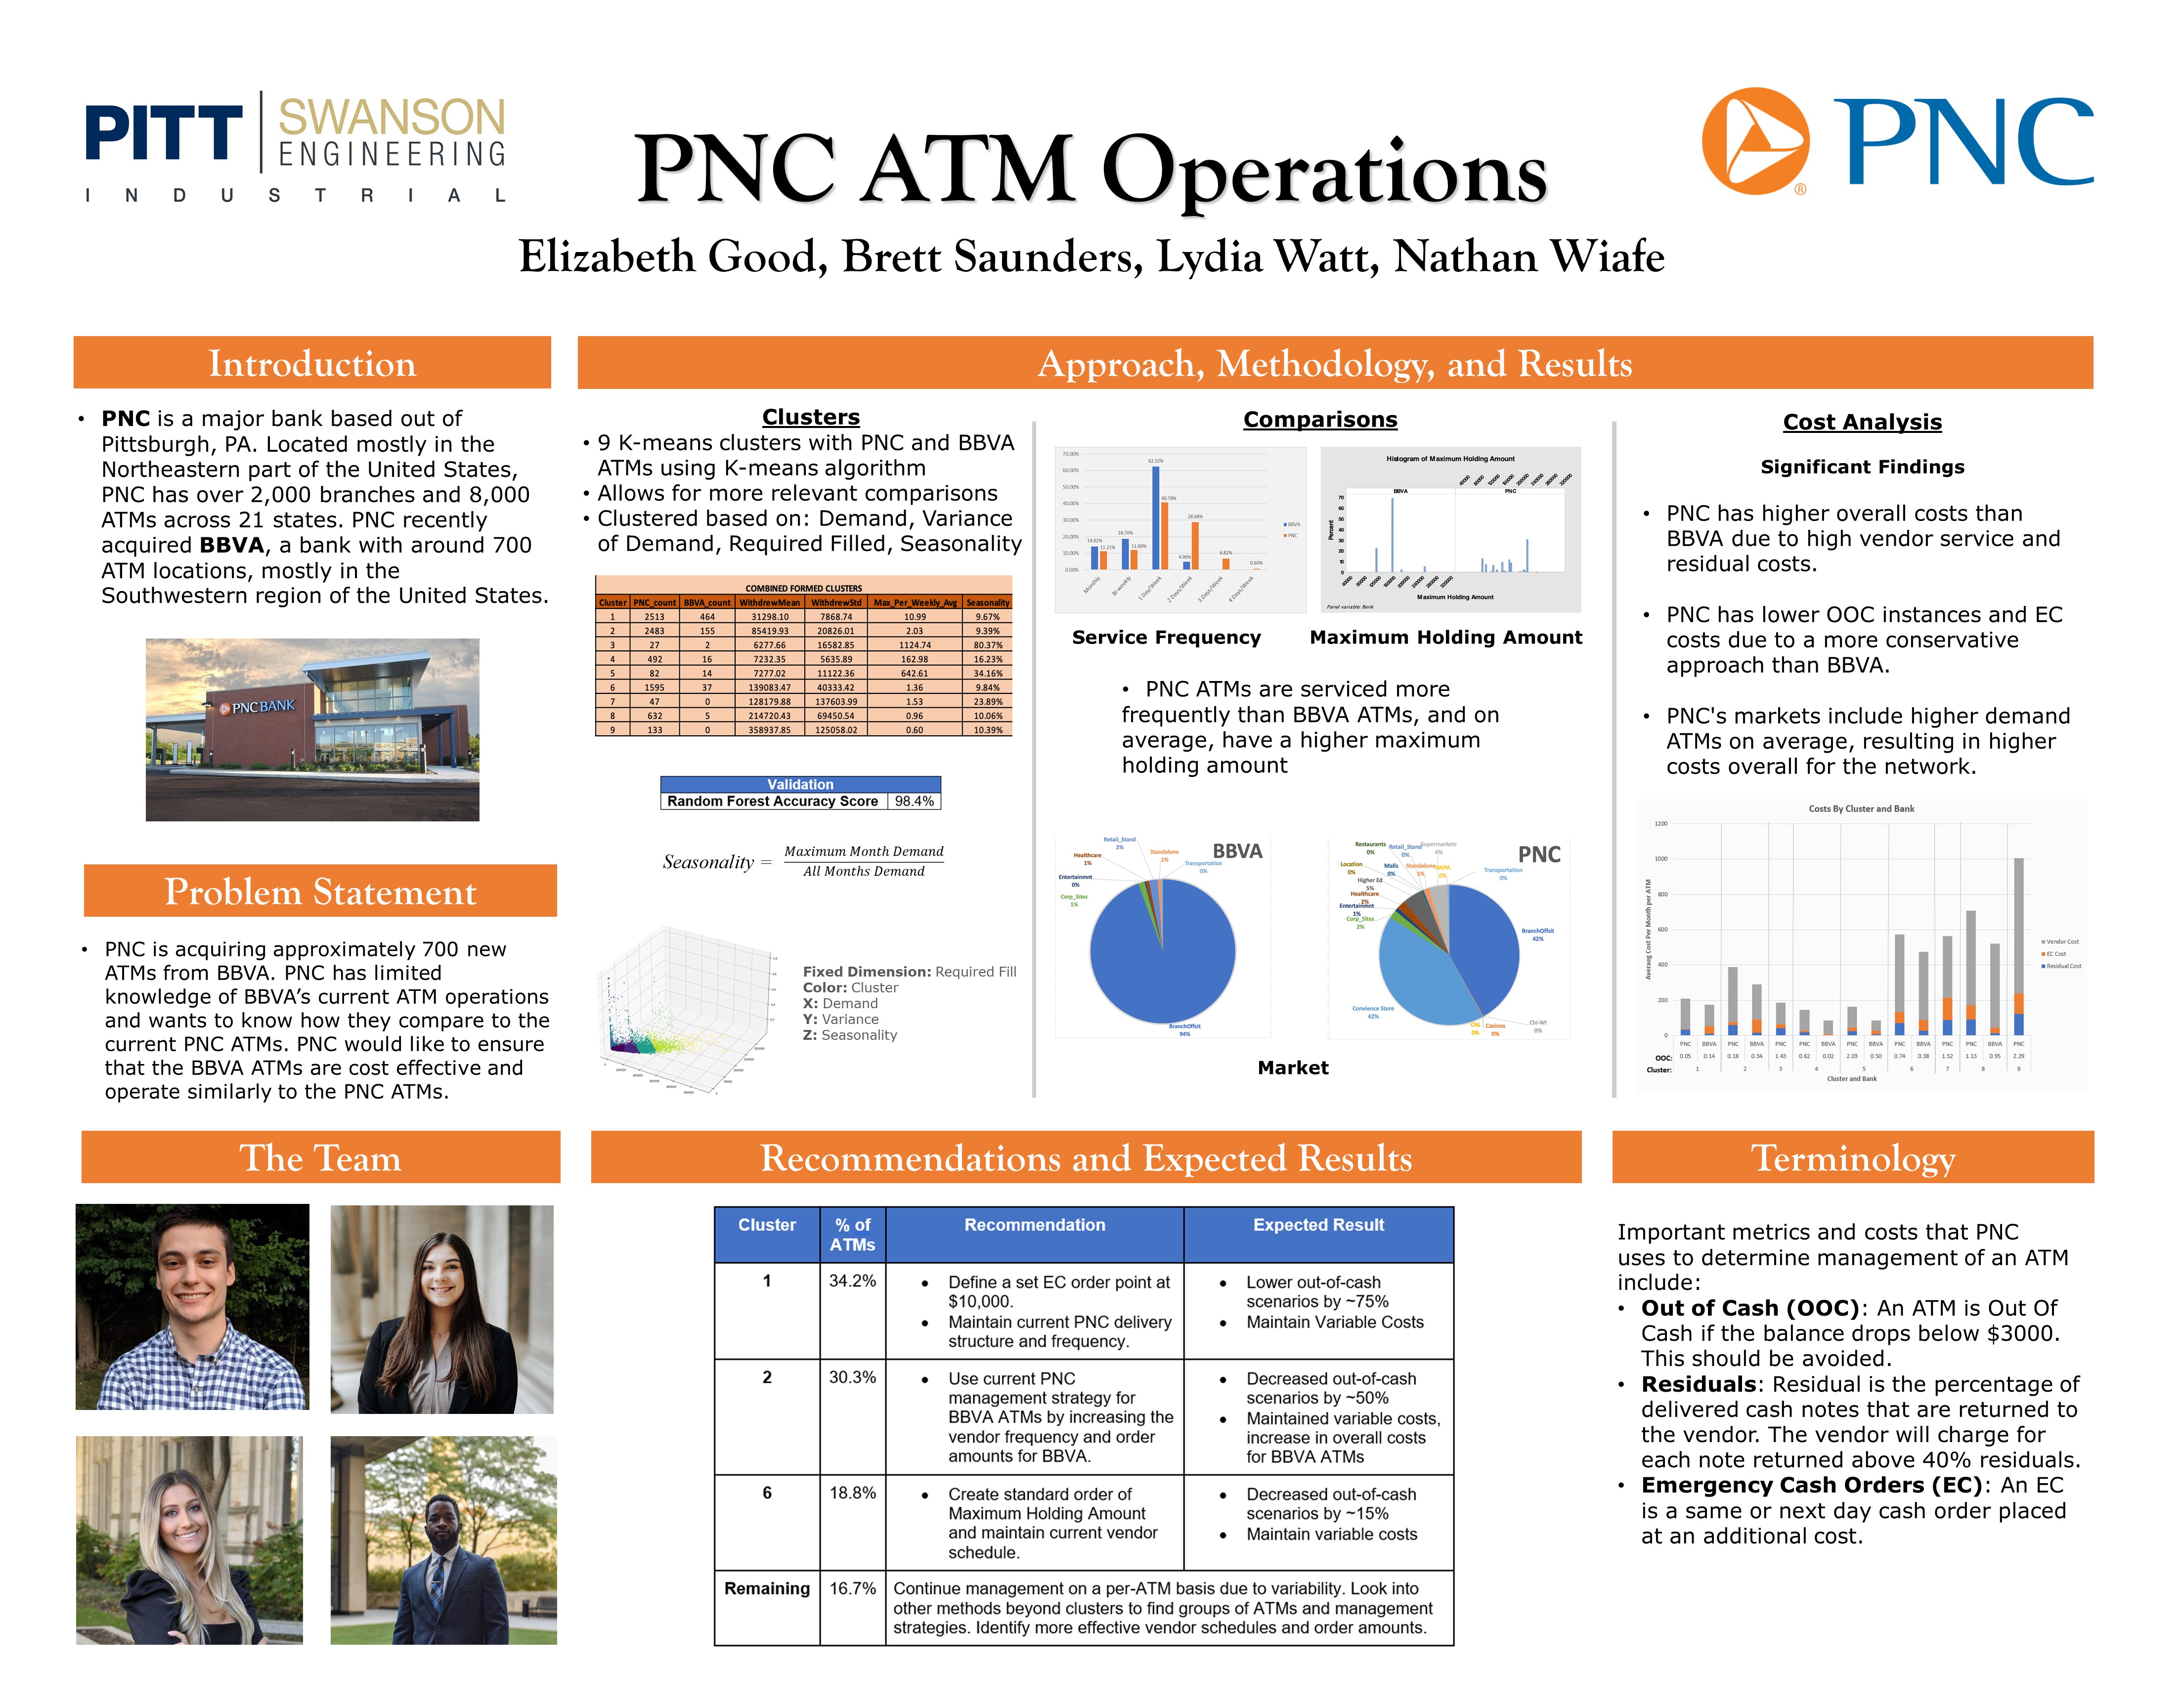 Senior Design Project - PNC ATM Operations